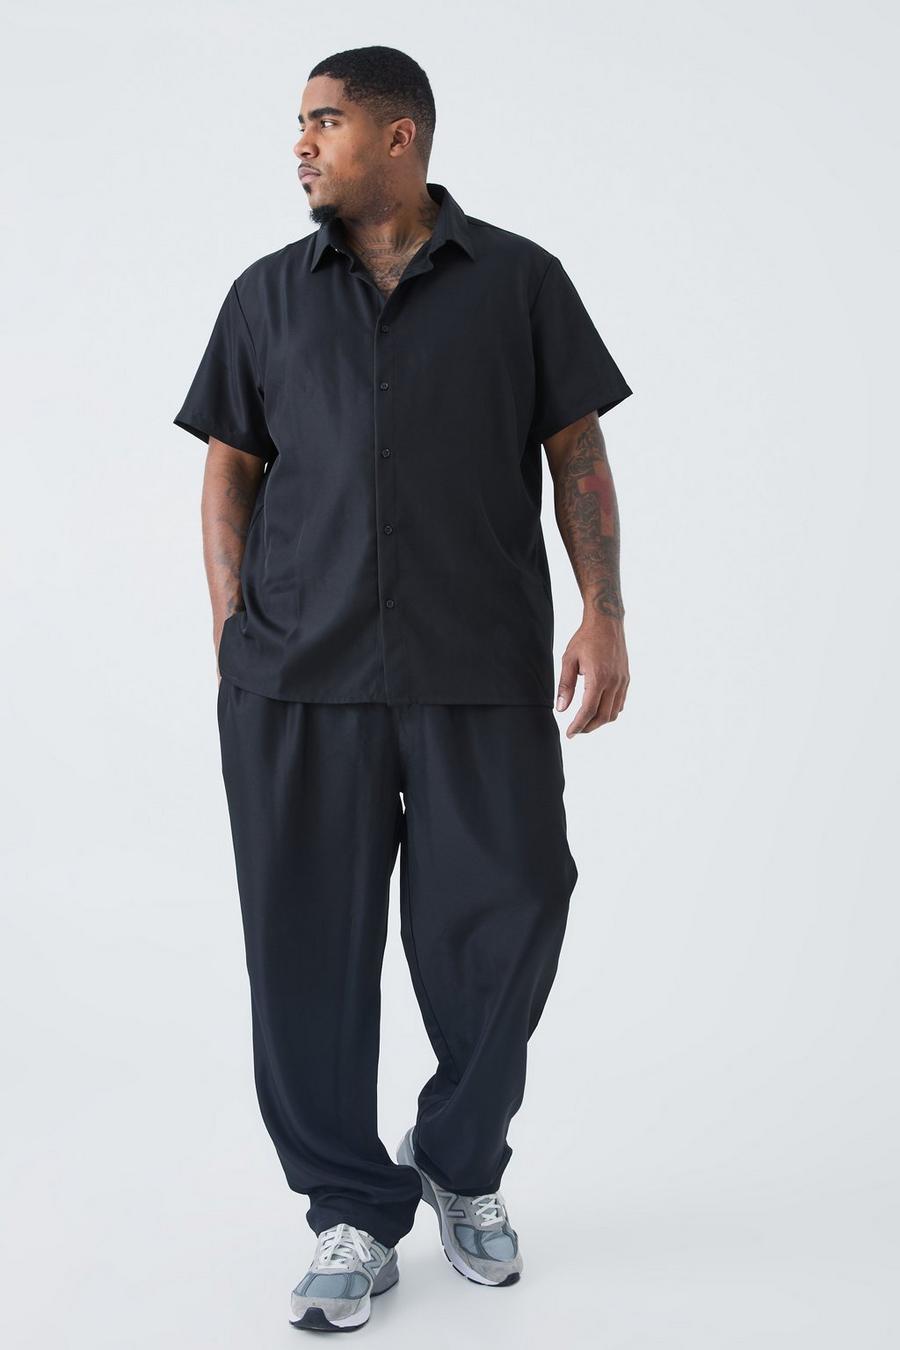 Pantalón Plus de sarga suave y camisa elegante de manga corta, Black